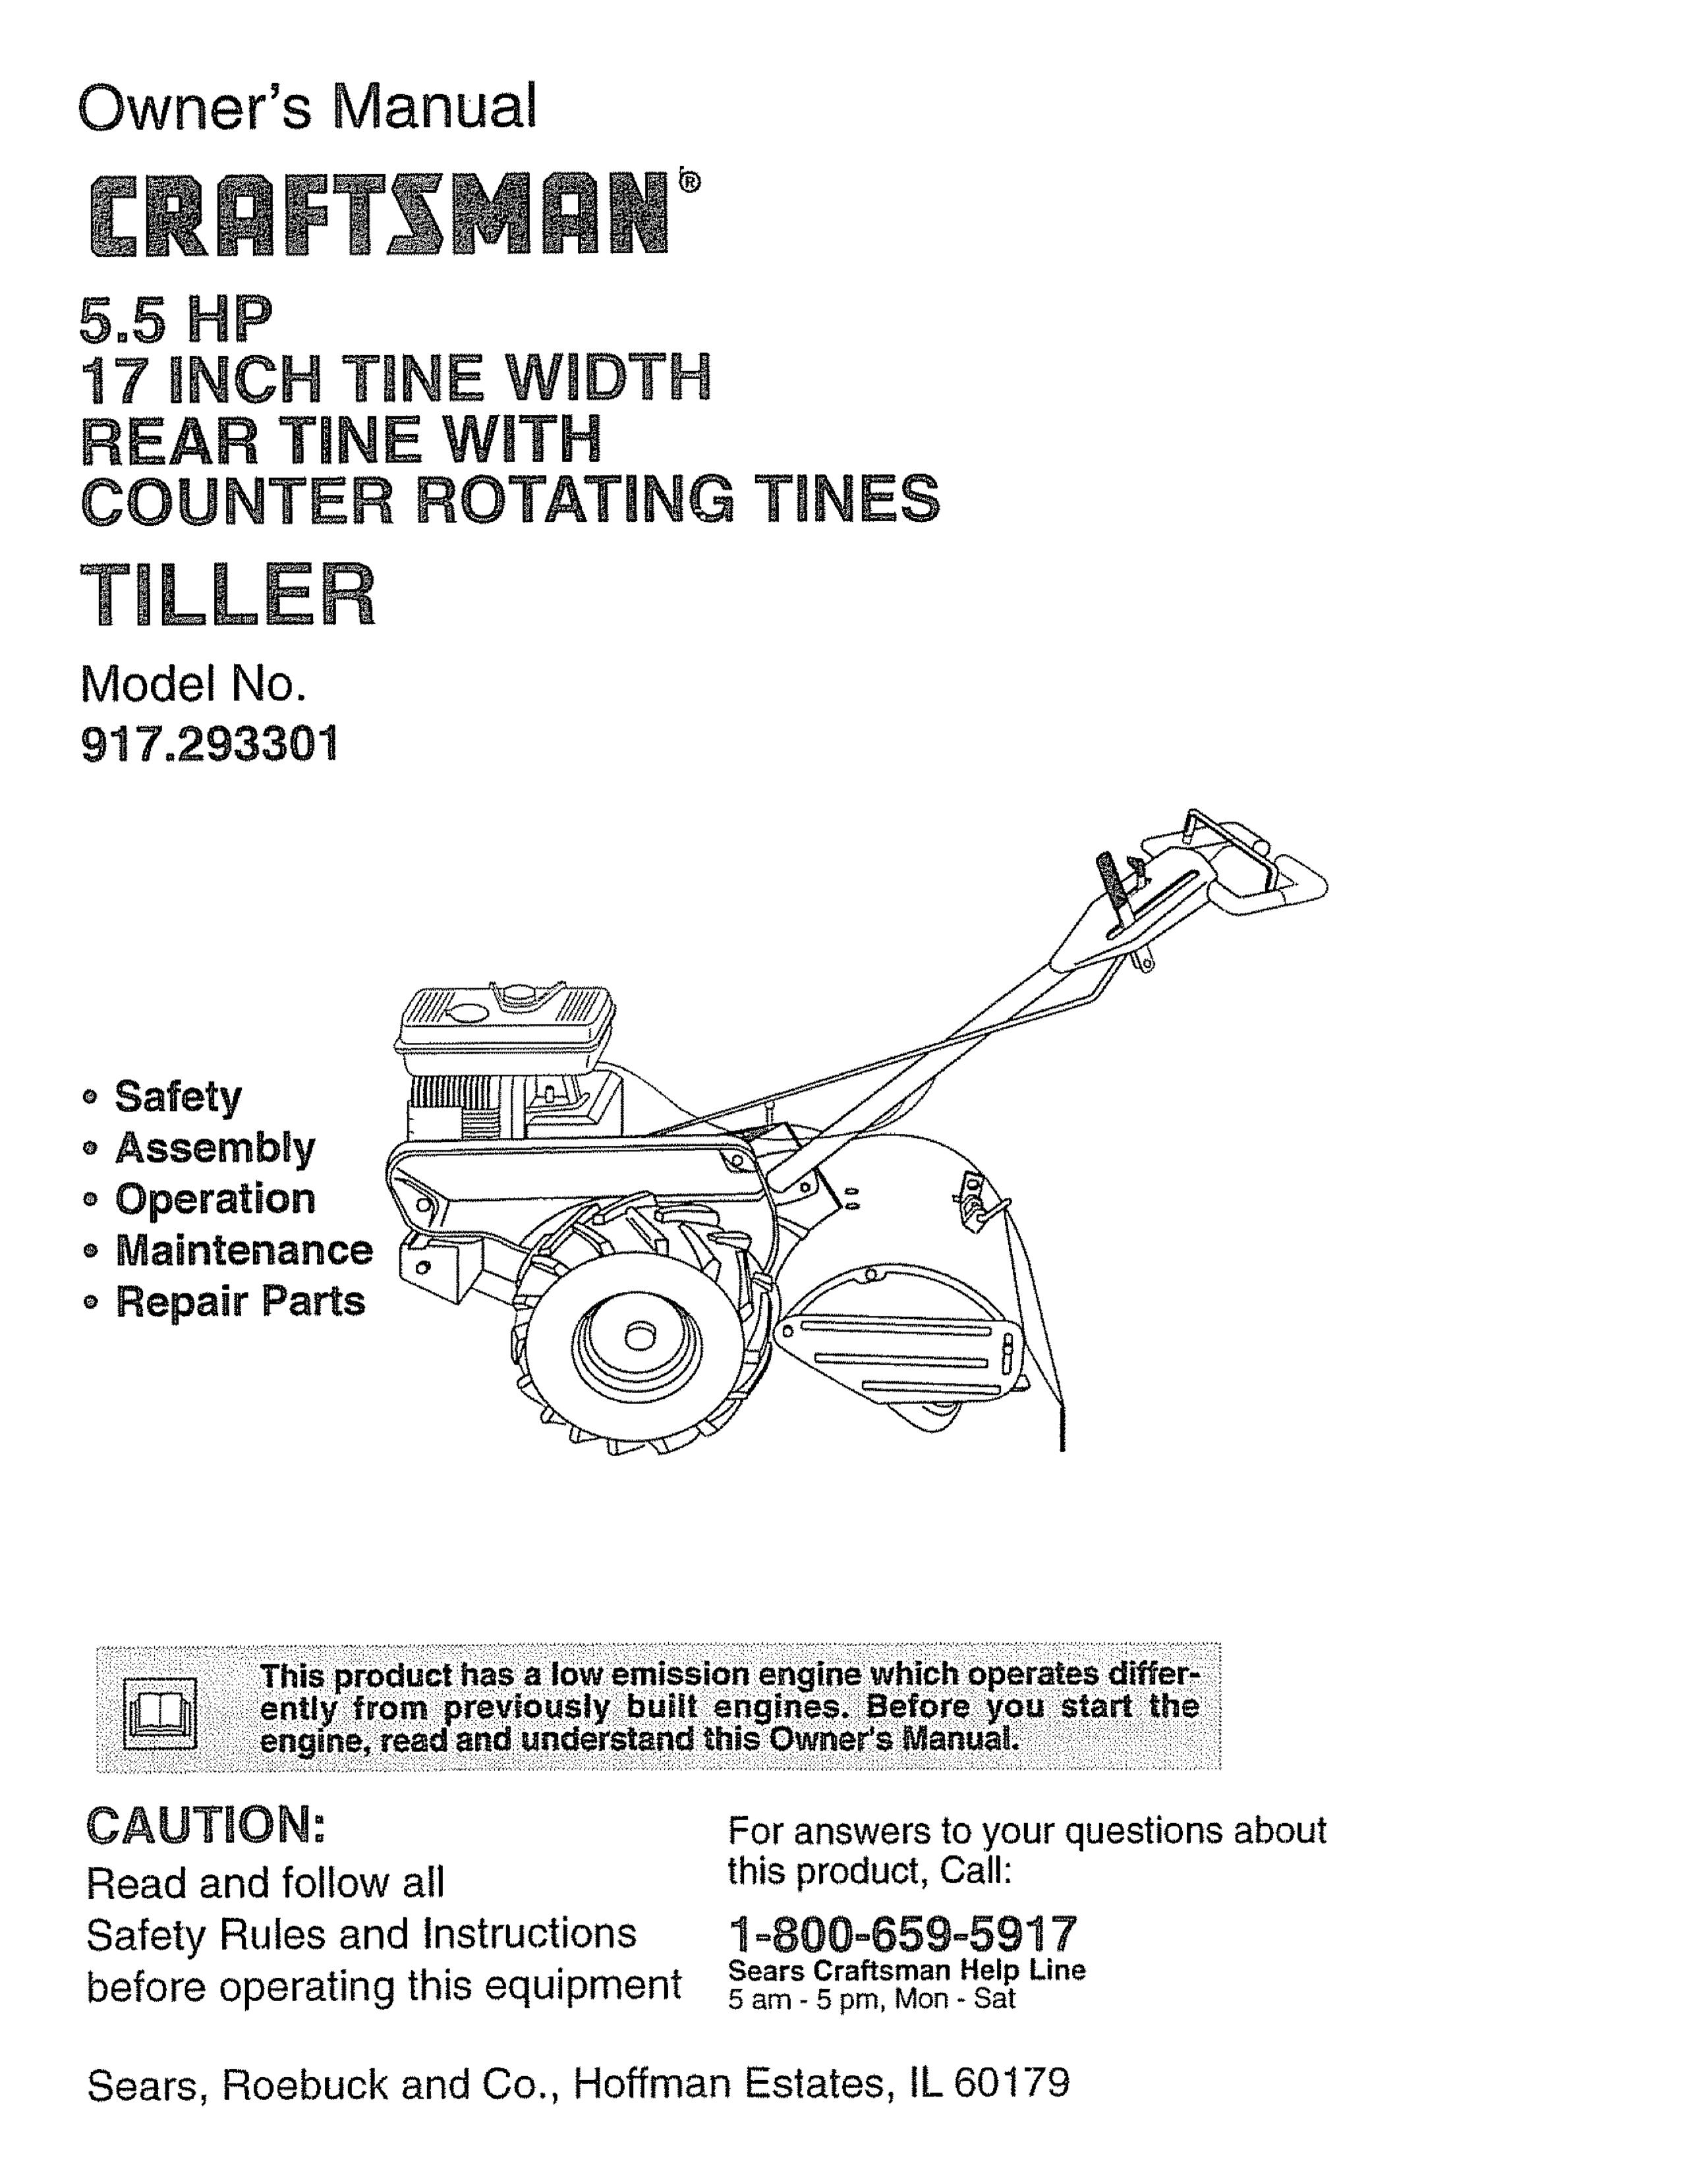 Craftsman 917.293301 Tiller User Manual